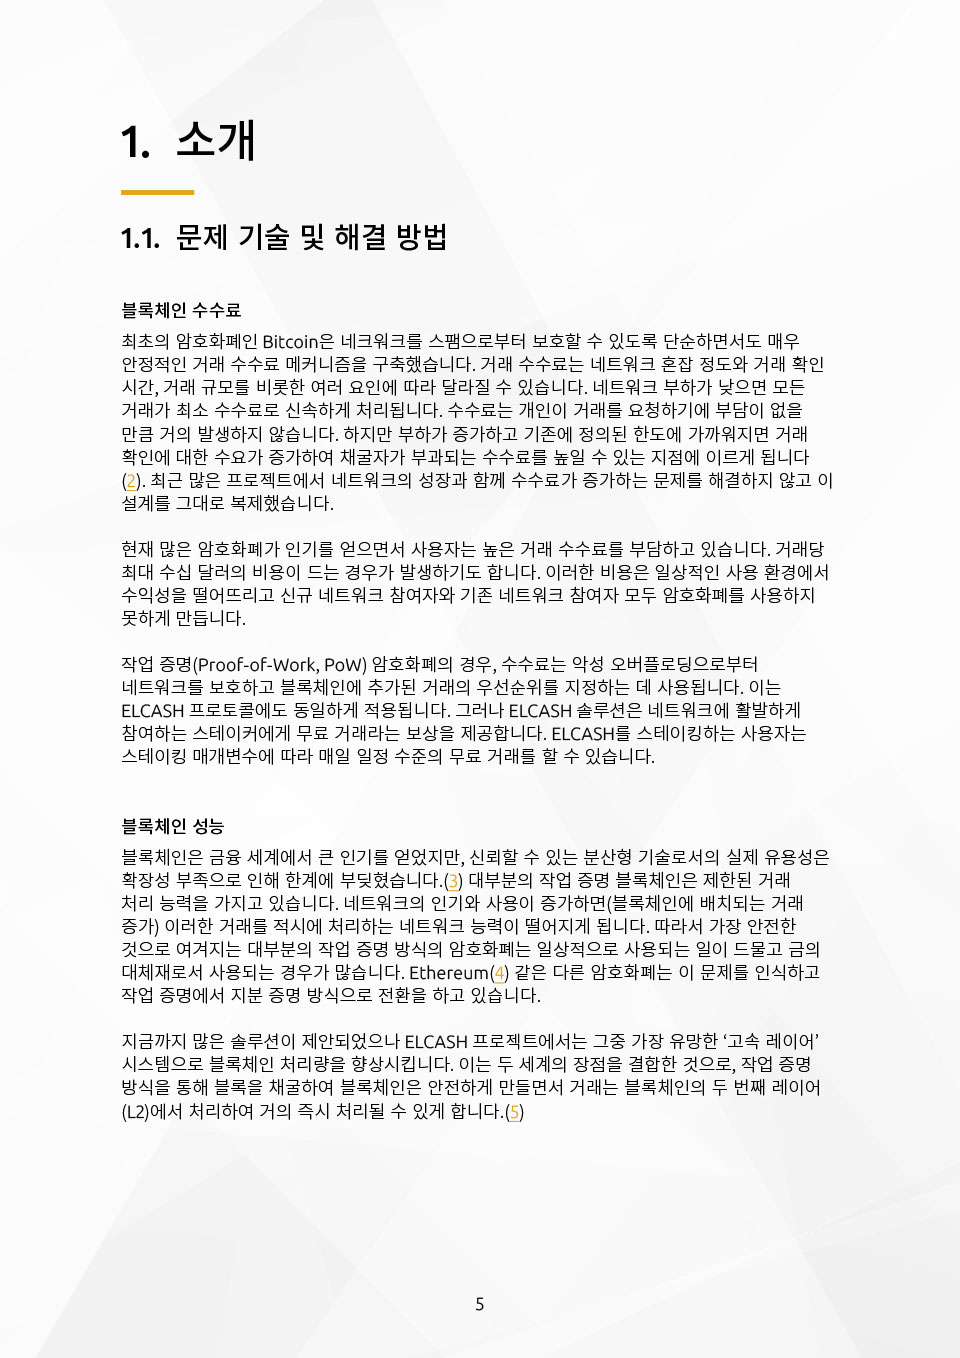 Strona dokumentu po koreańsku